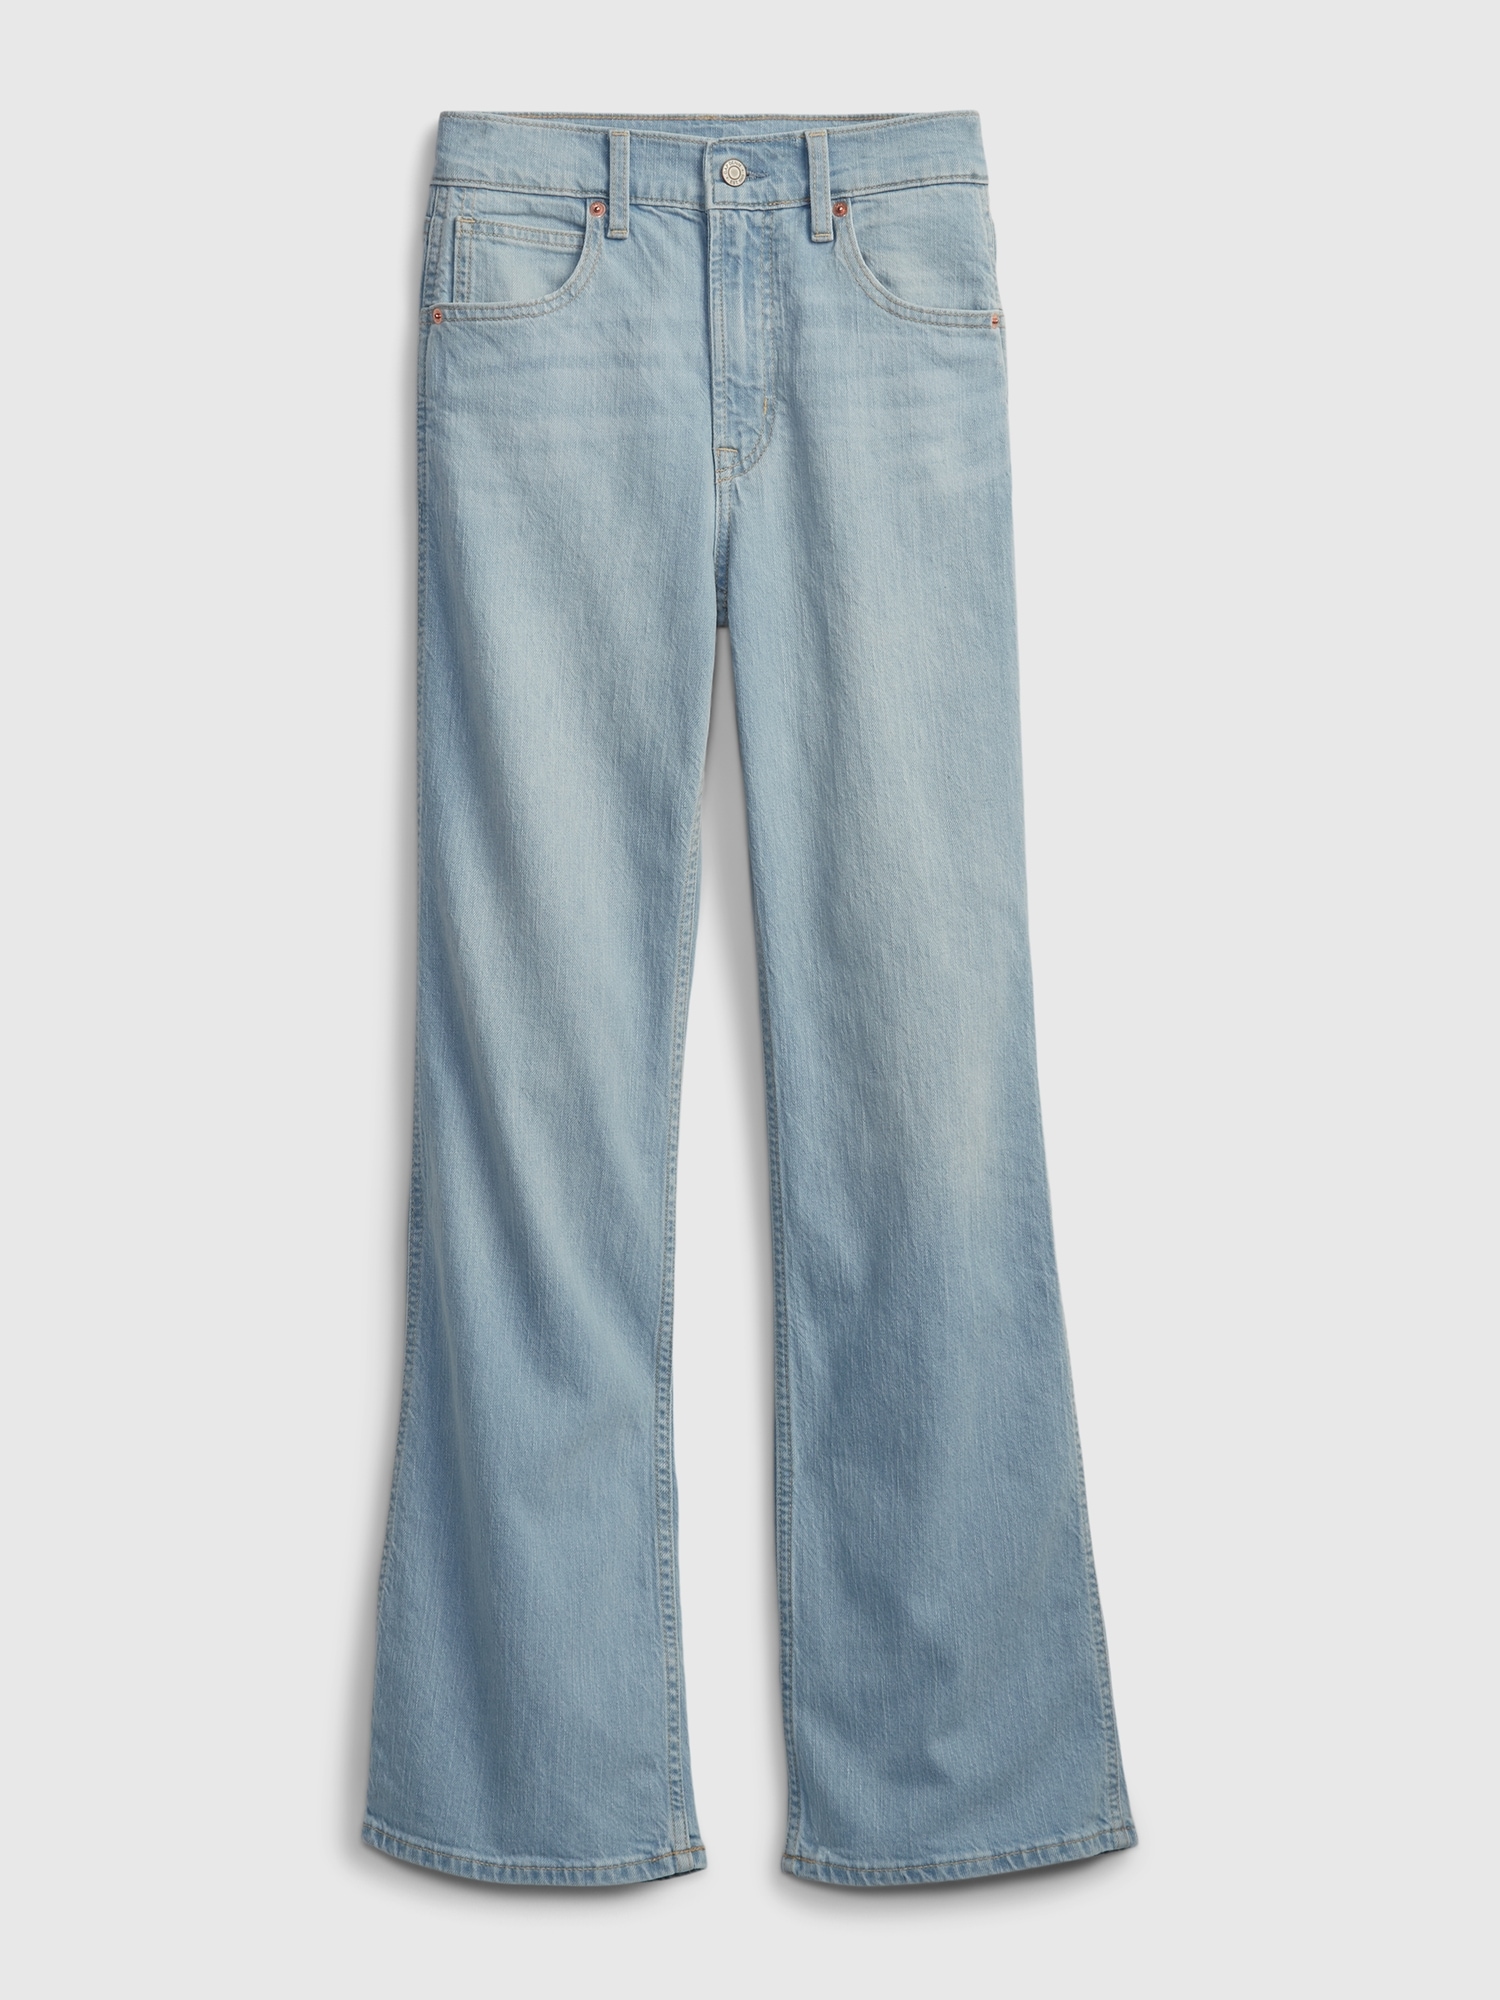 Gap High Rise Vintage Jean Pantolon. 5